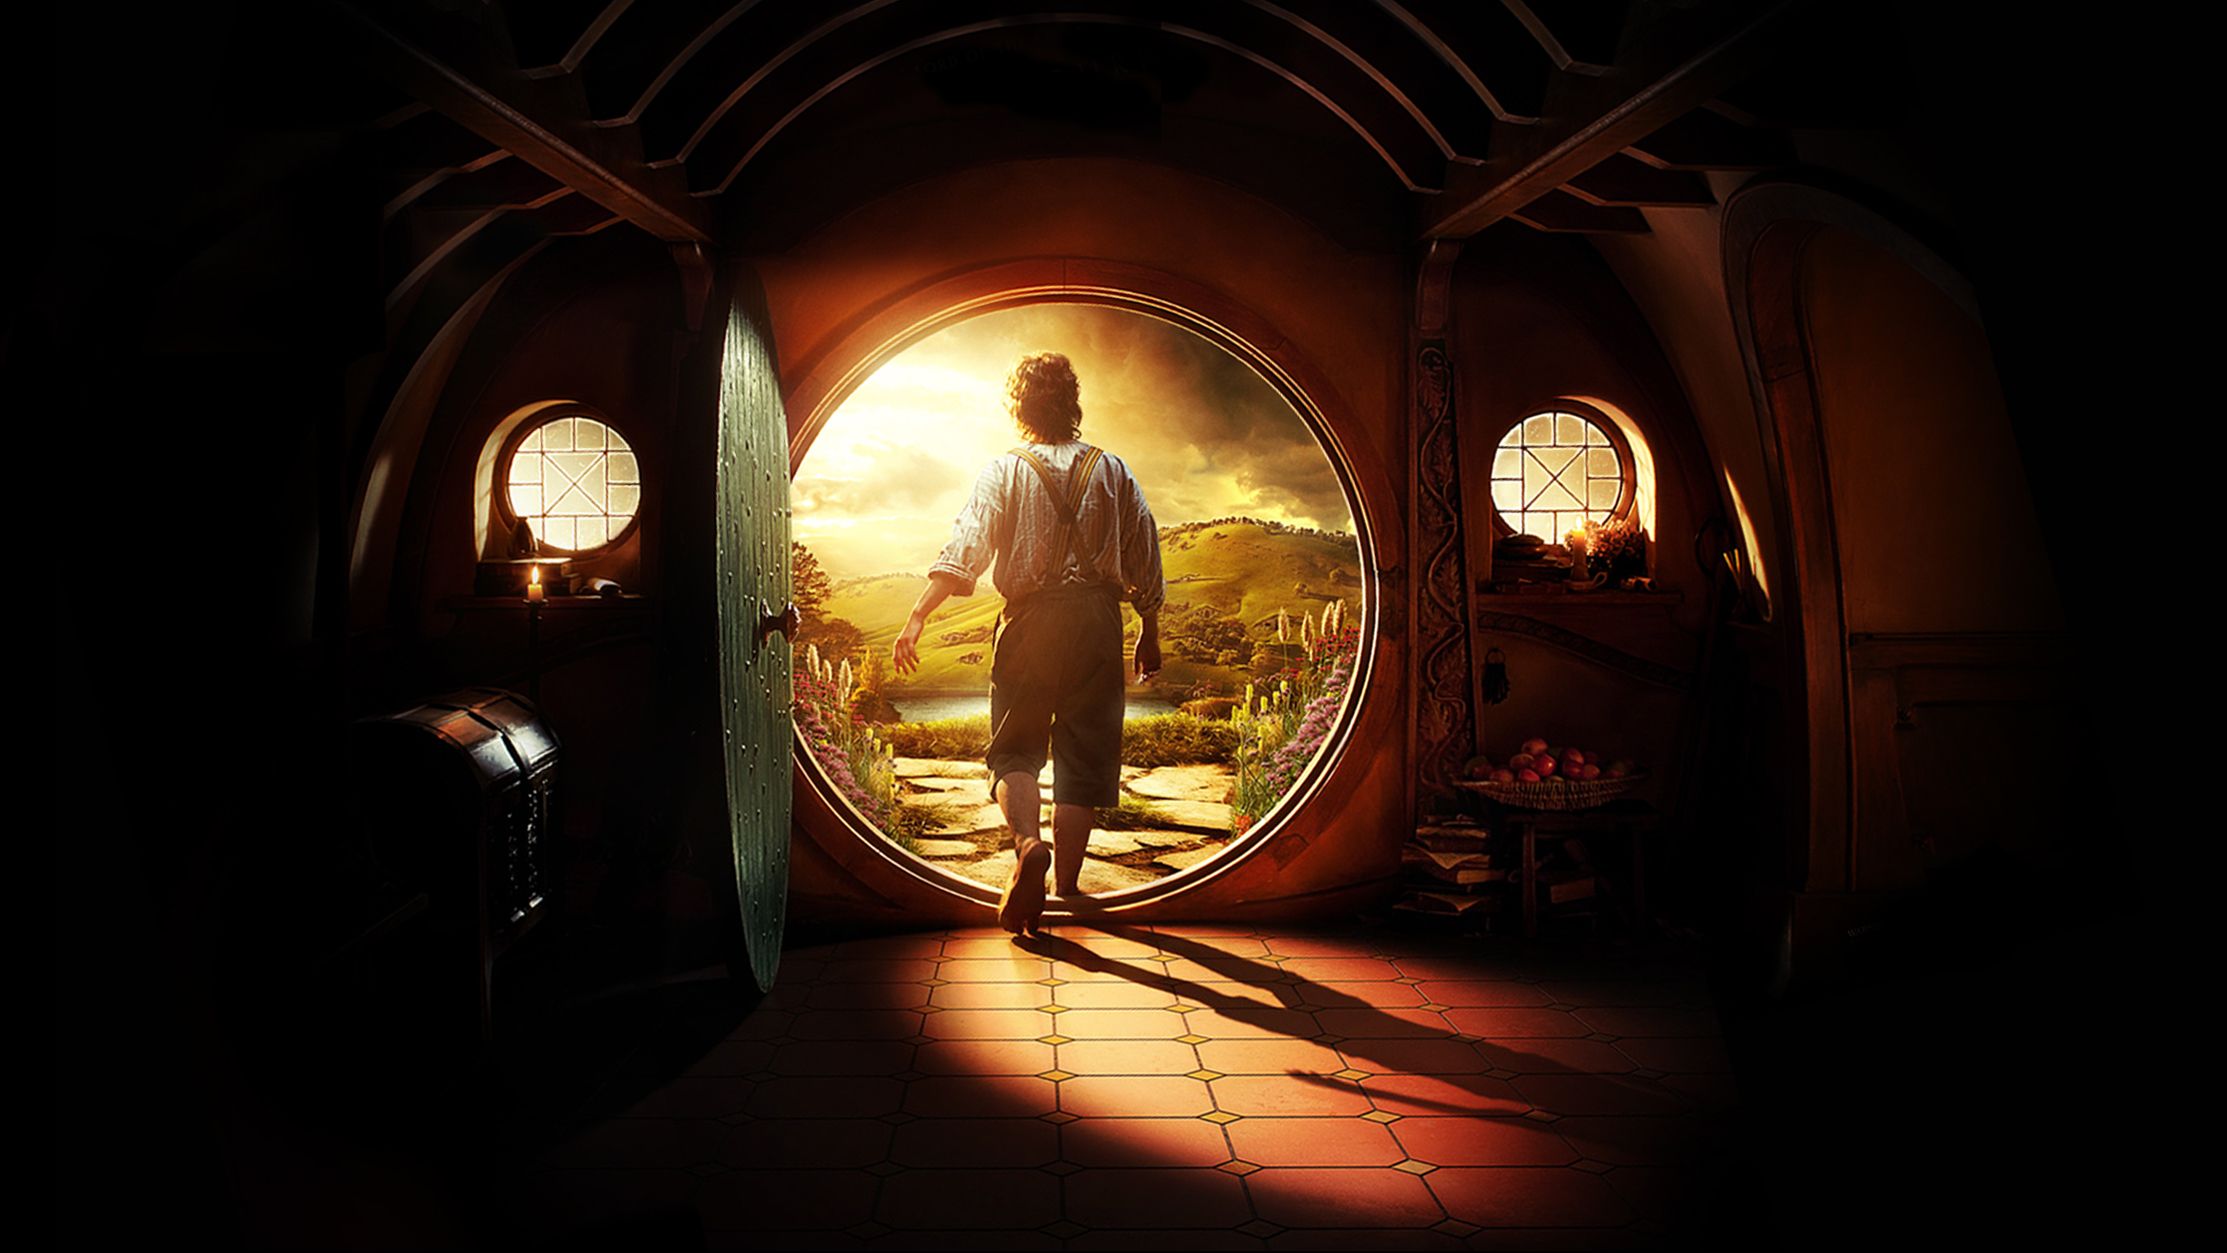 The Hobbit - Bilbo Baggins Wallpaper - The Hobbit Photo 33042280